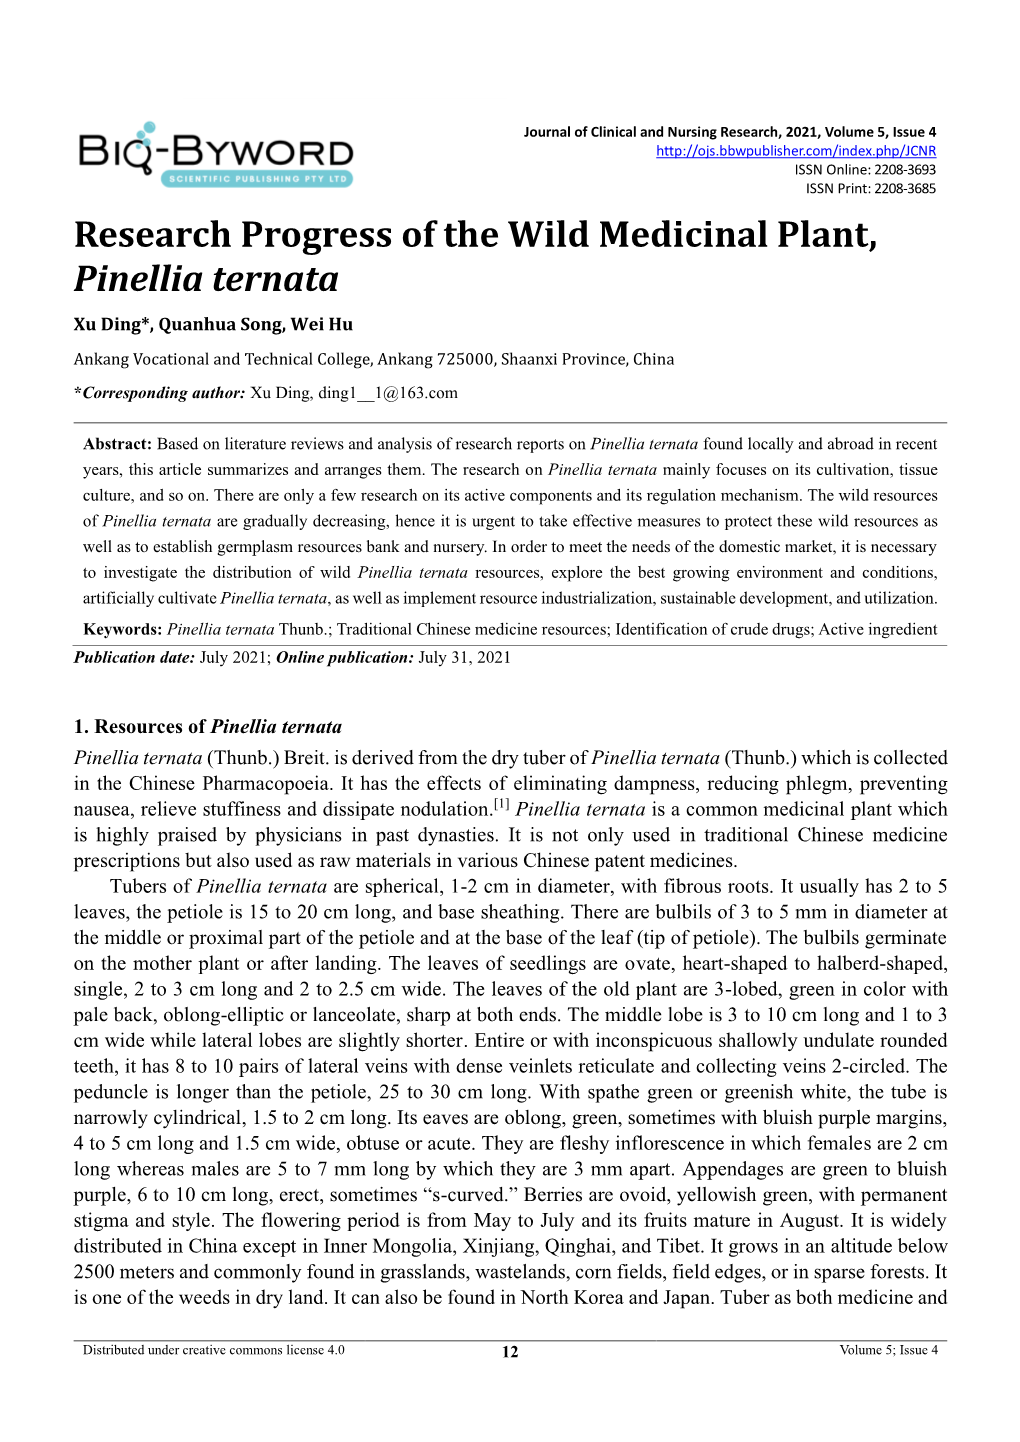 Research Progress of the Wild Medicinal Plant, Pinellia Ternata